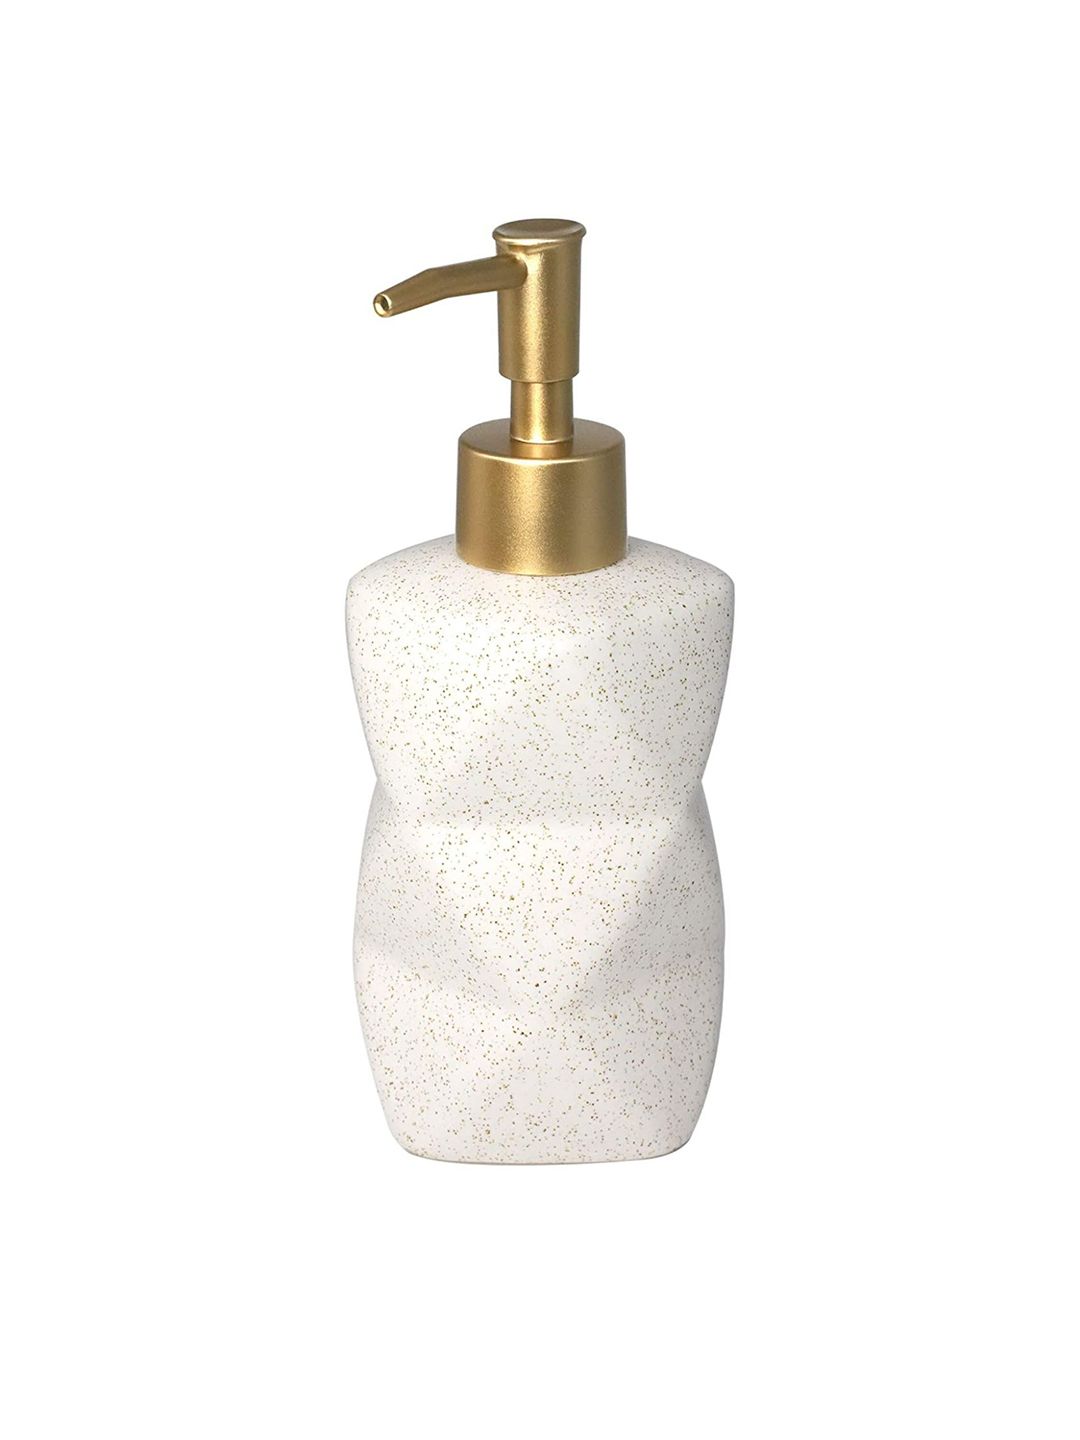 FabSeasons White & Gold-Toned Ceramic Soap Dispenser Price in India